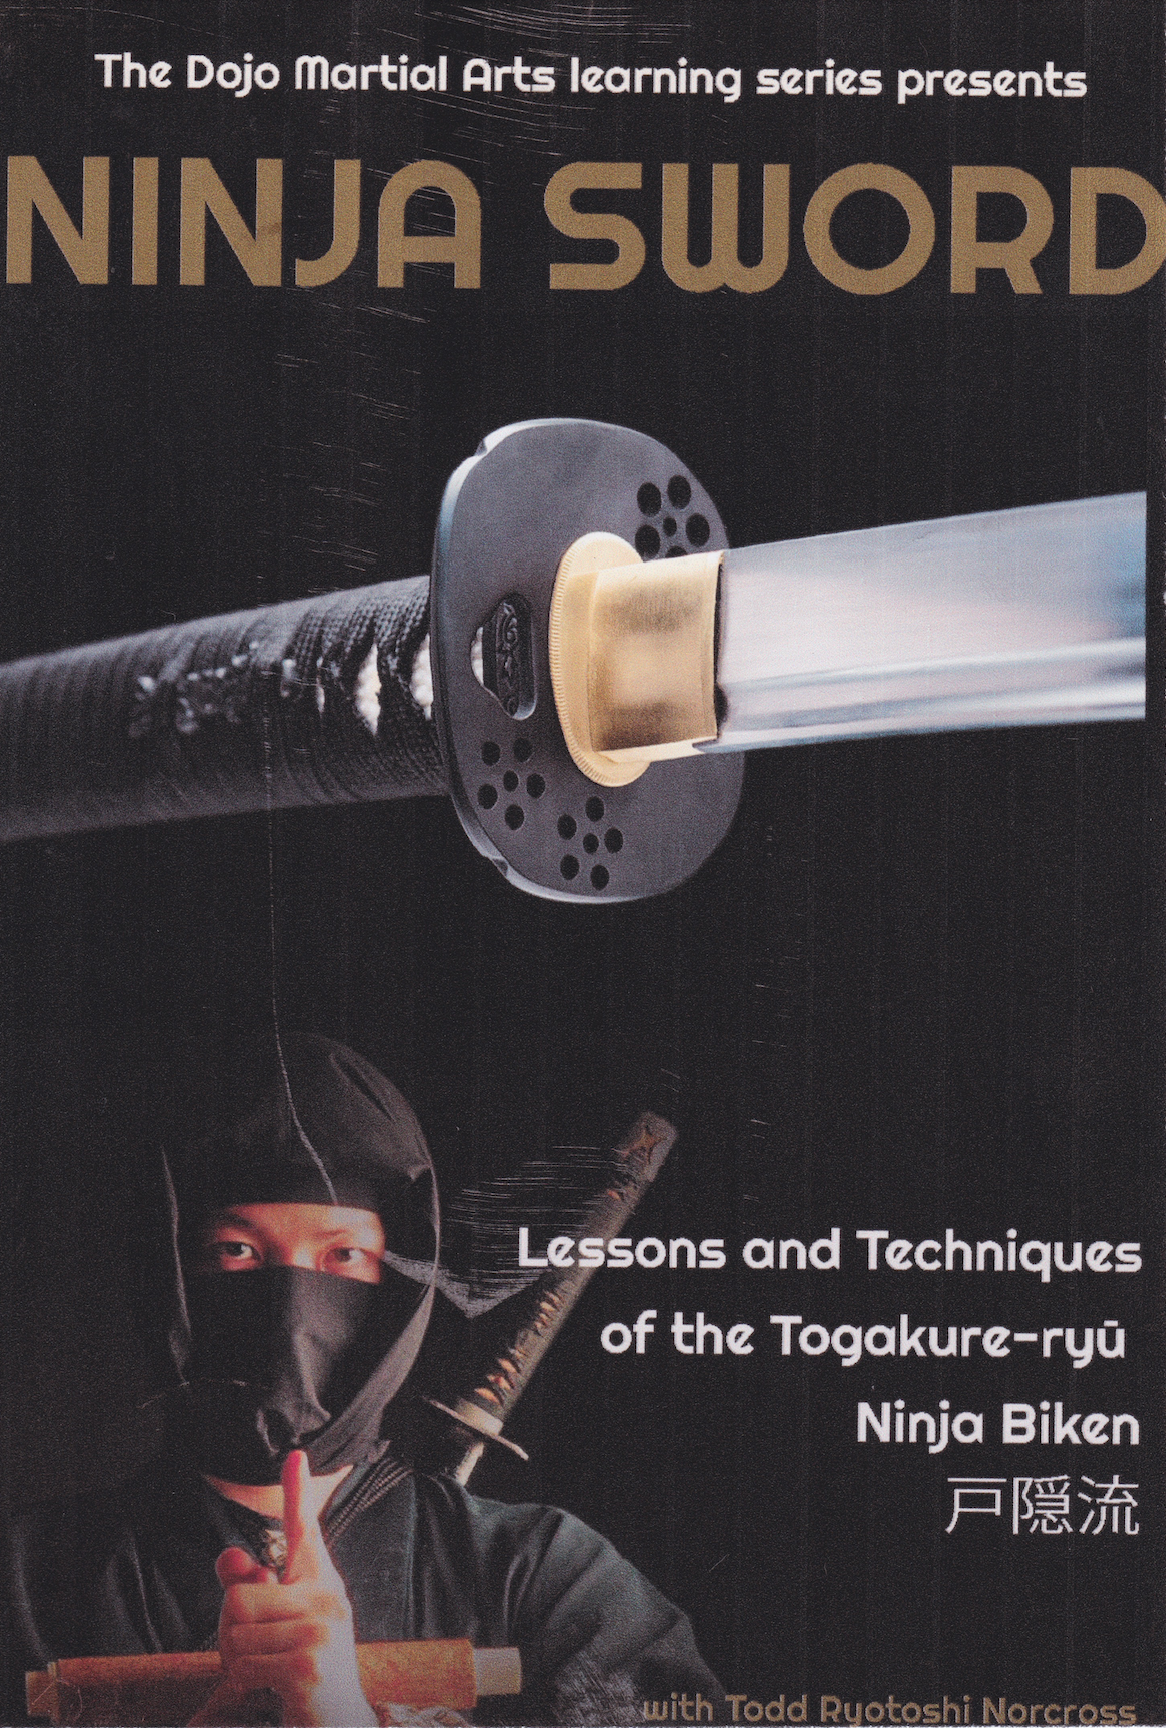 Ninja Sword DVD with Todd Norcross.